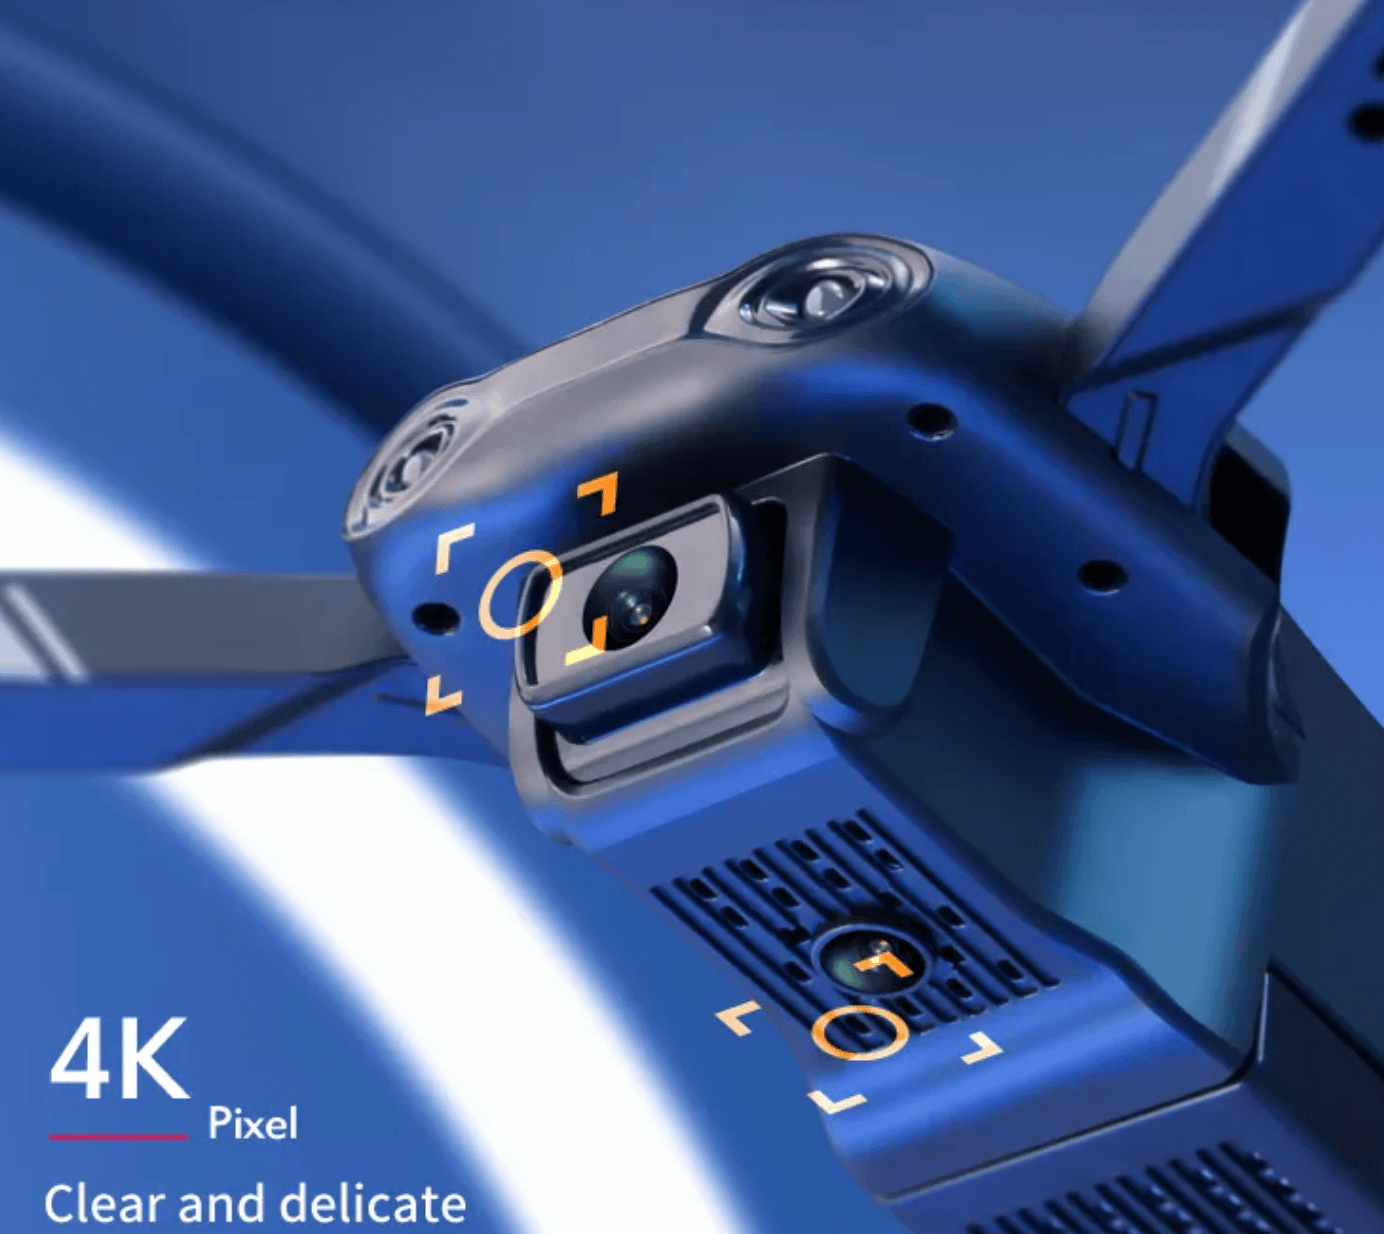 4DRC V13 Drone 4k Dual Camera WiFi FPV Mini Drone Dual Camera Foldable Quadcopter - RCDrone